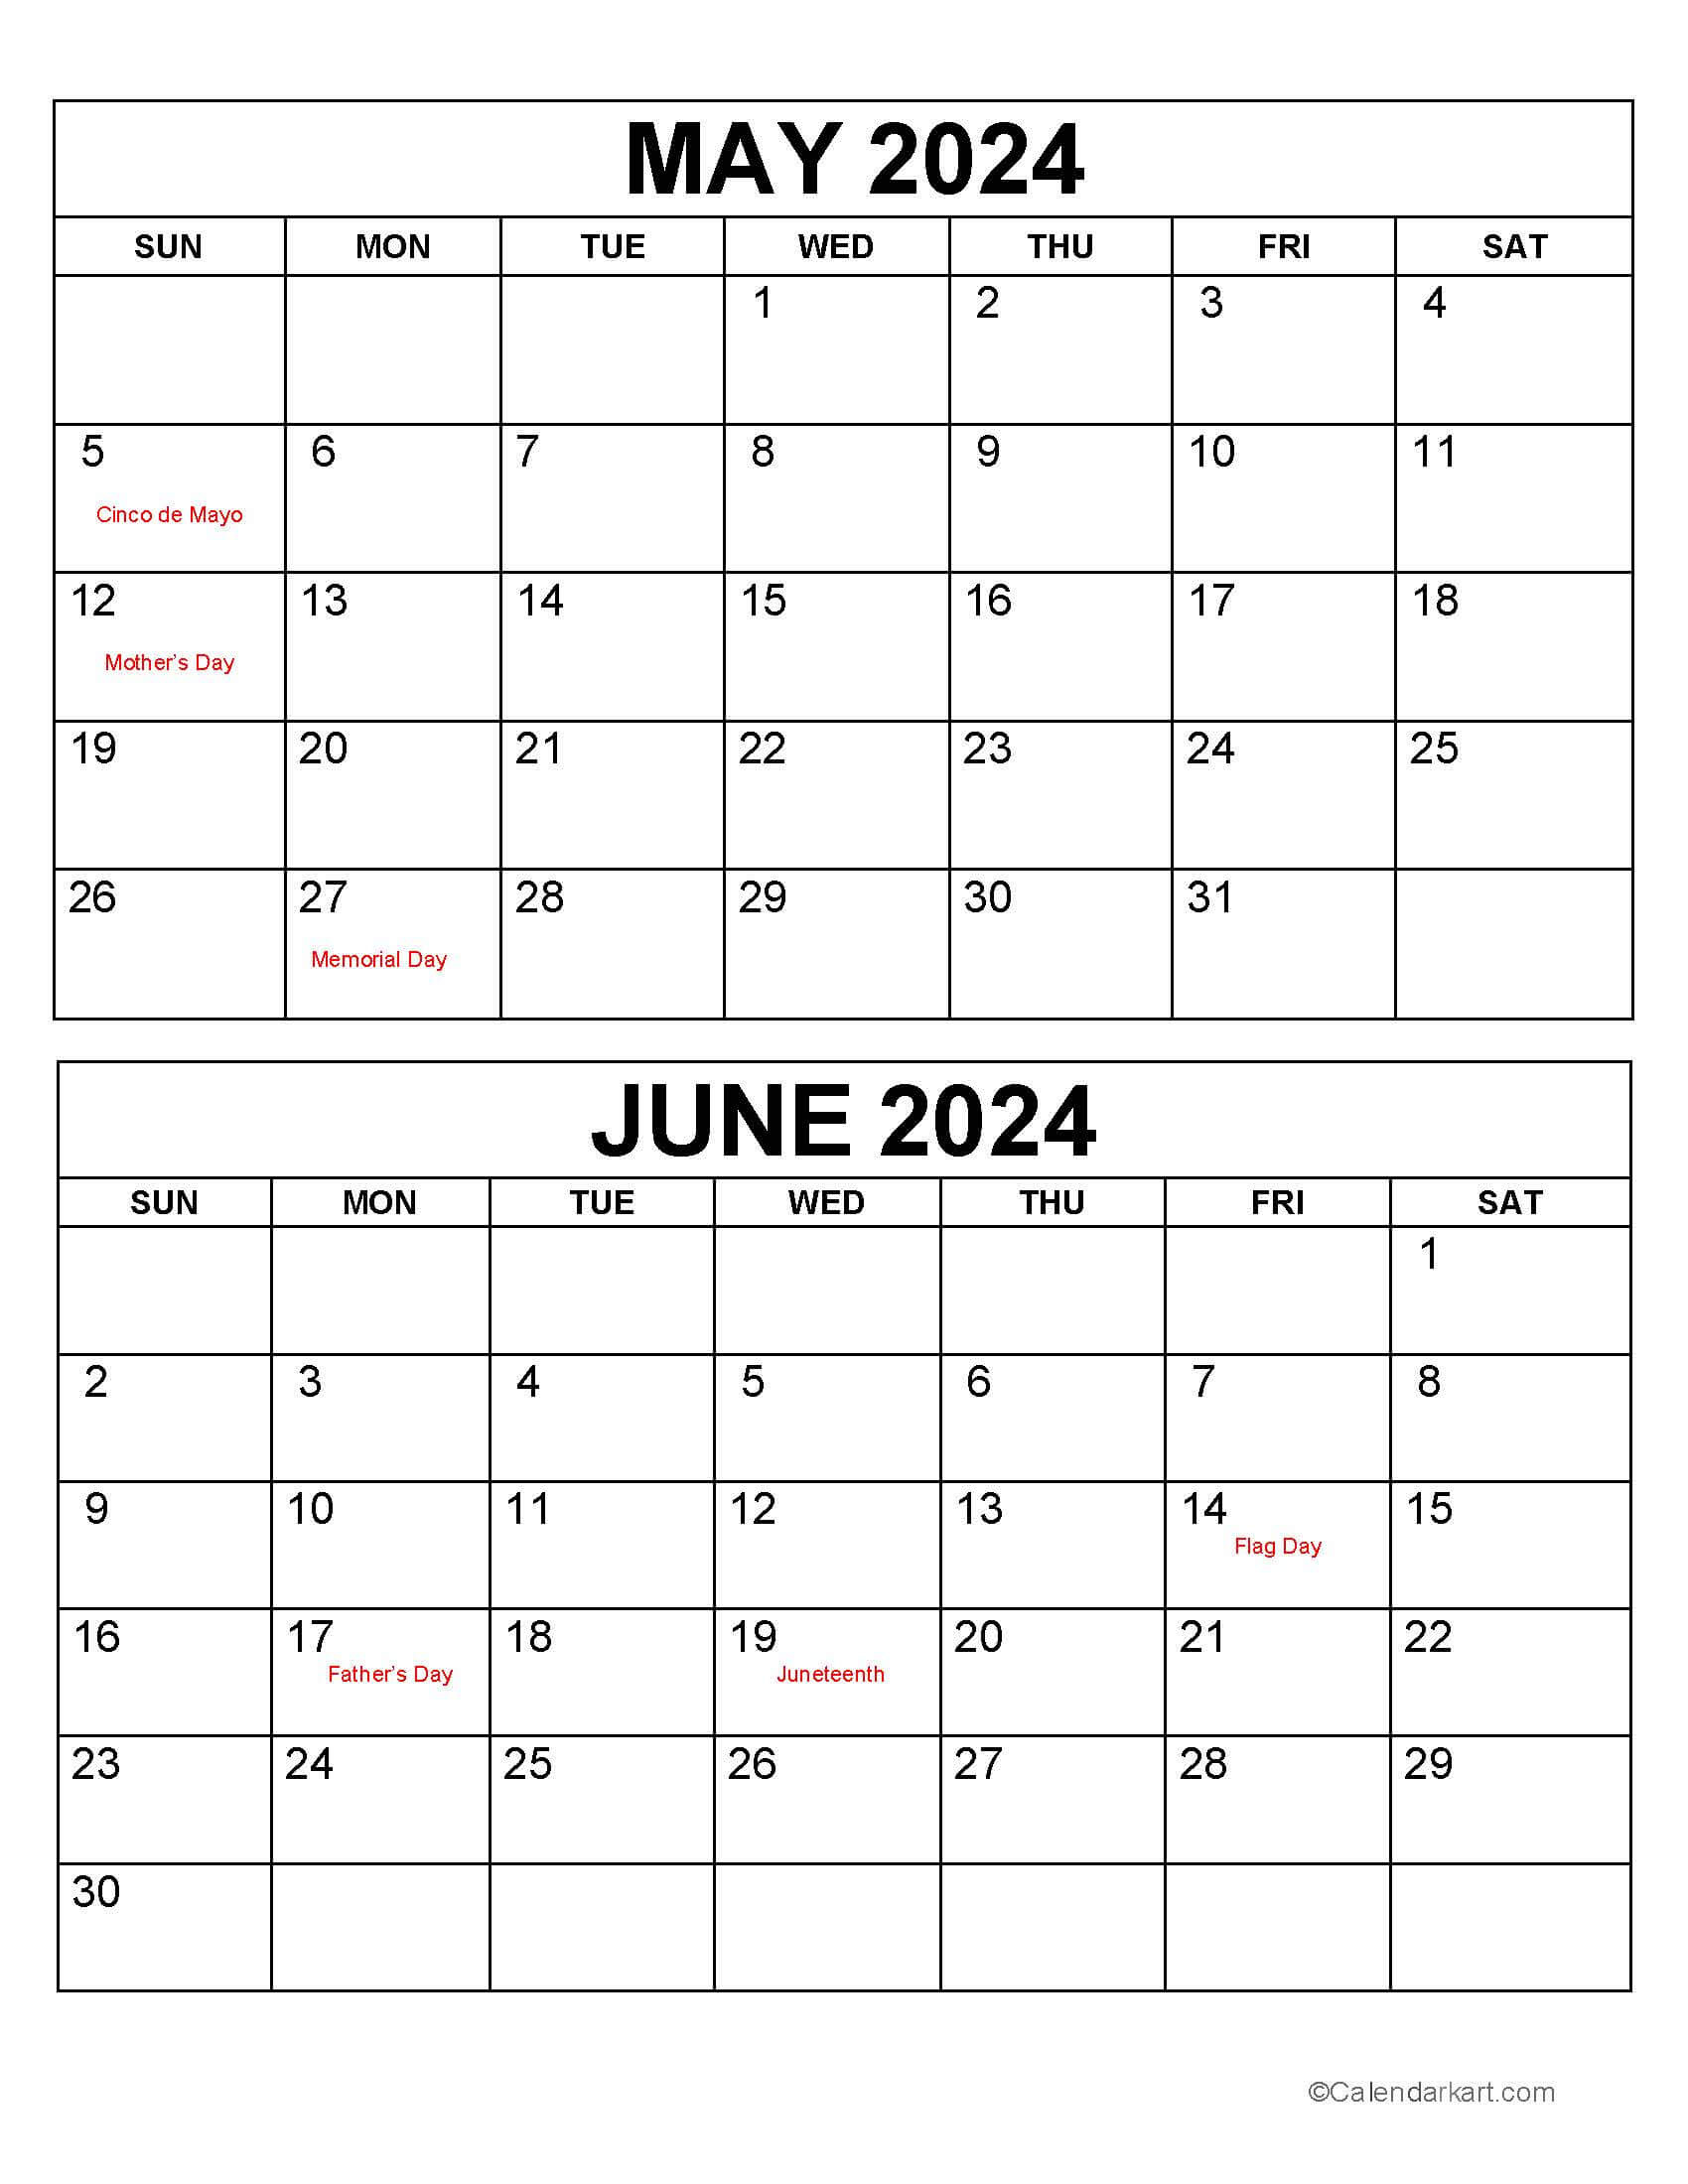 May June 2024 Calendars (3Rd Bi-Monthly) - Calendarkart regarding May June 2024 Calendar With Holidays